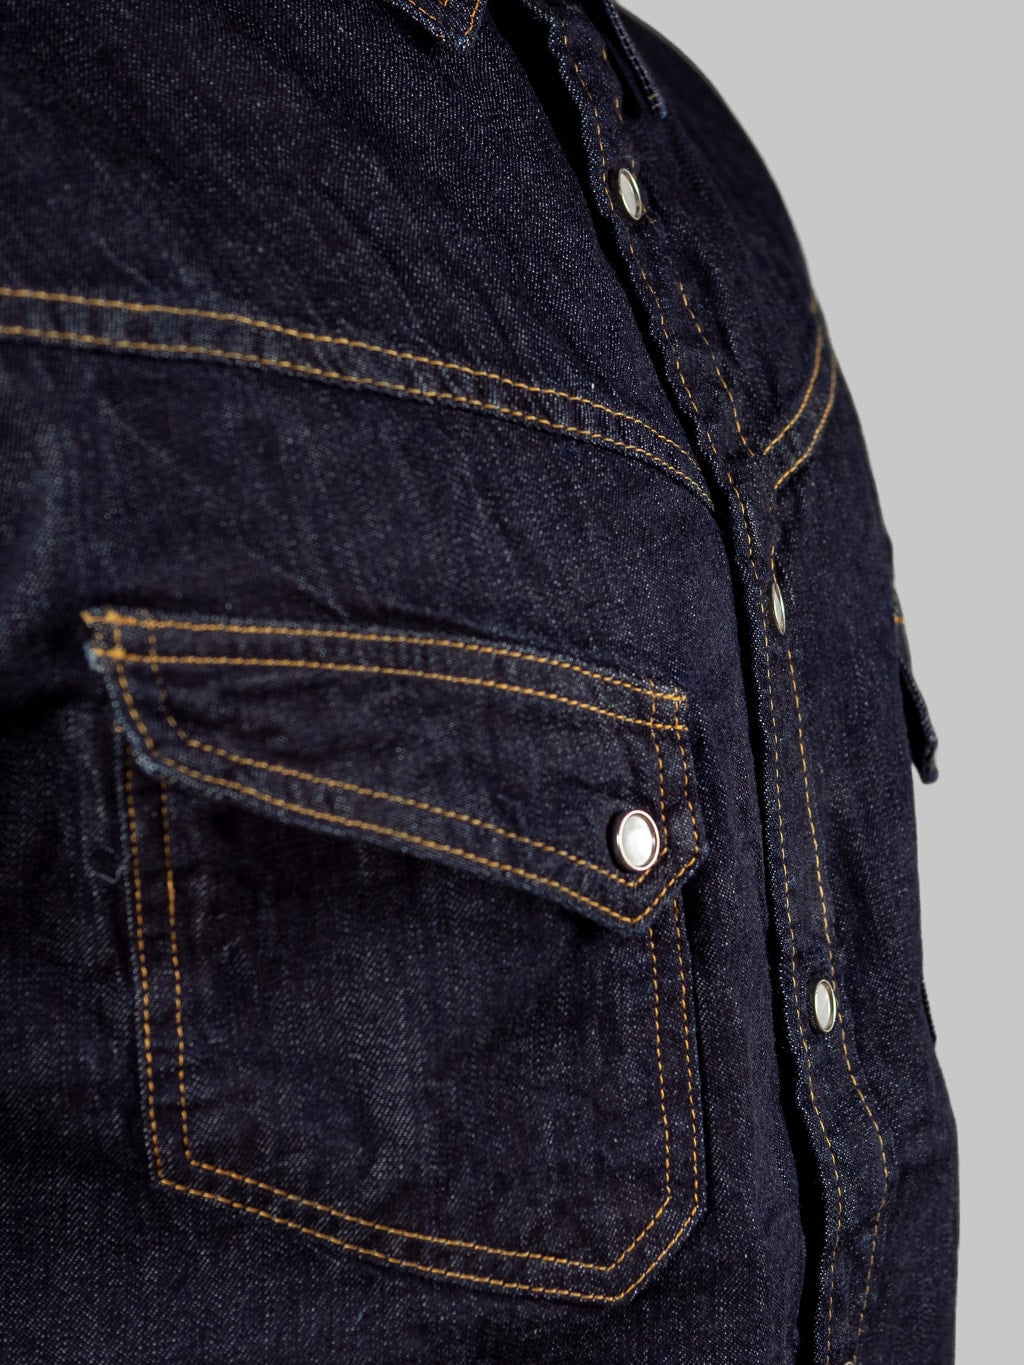 tcb jeans ranchman selvedge denim shirt chest details